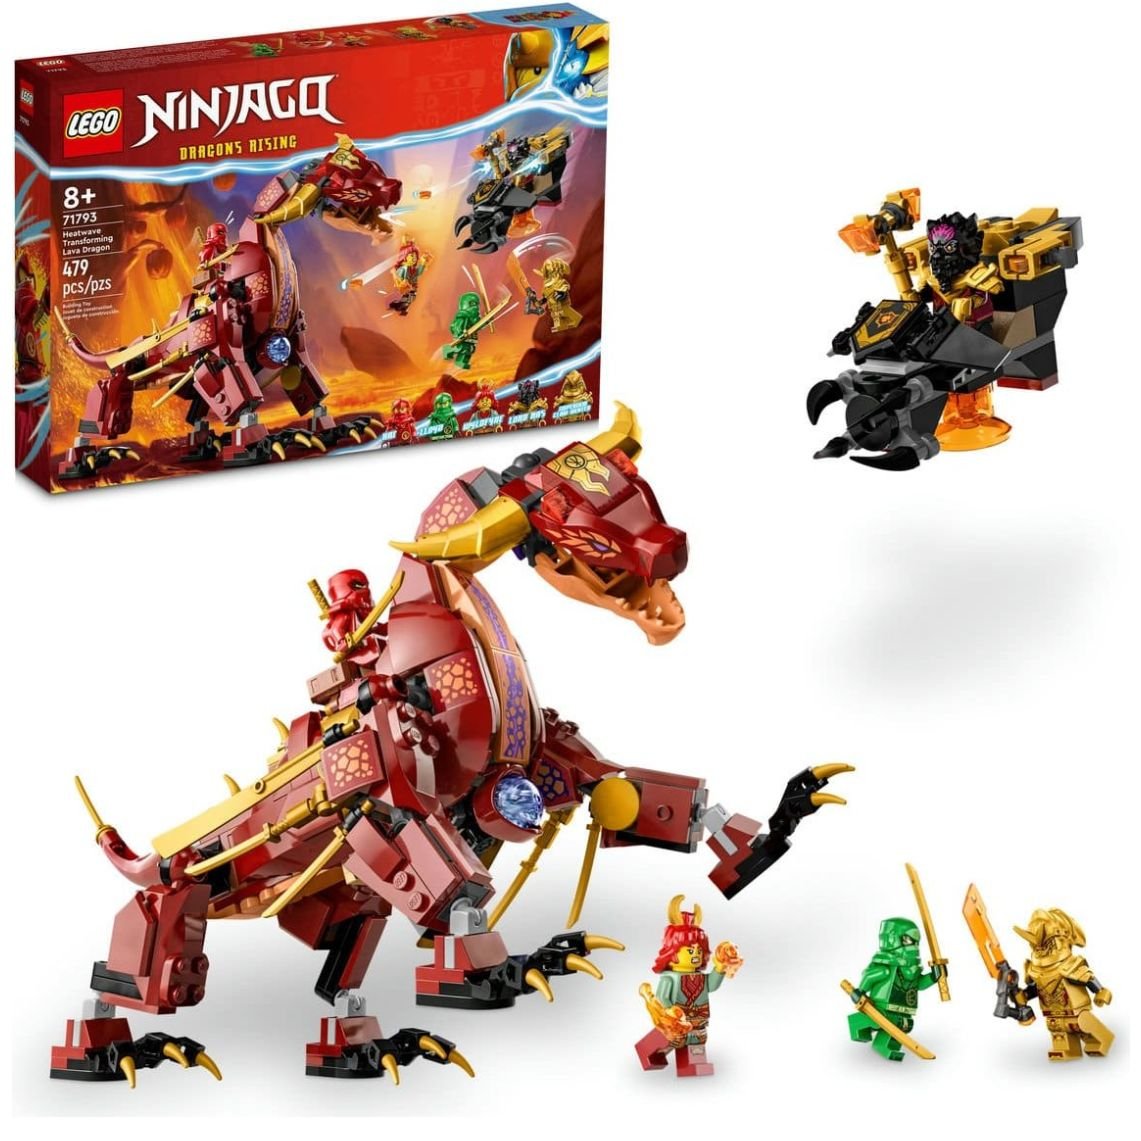 Lego vrac environ 890grs stars wars ninjago